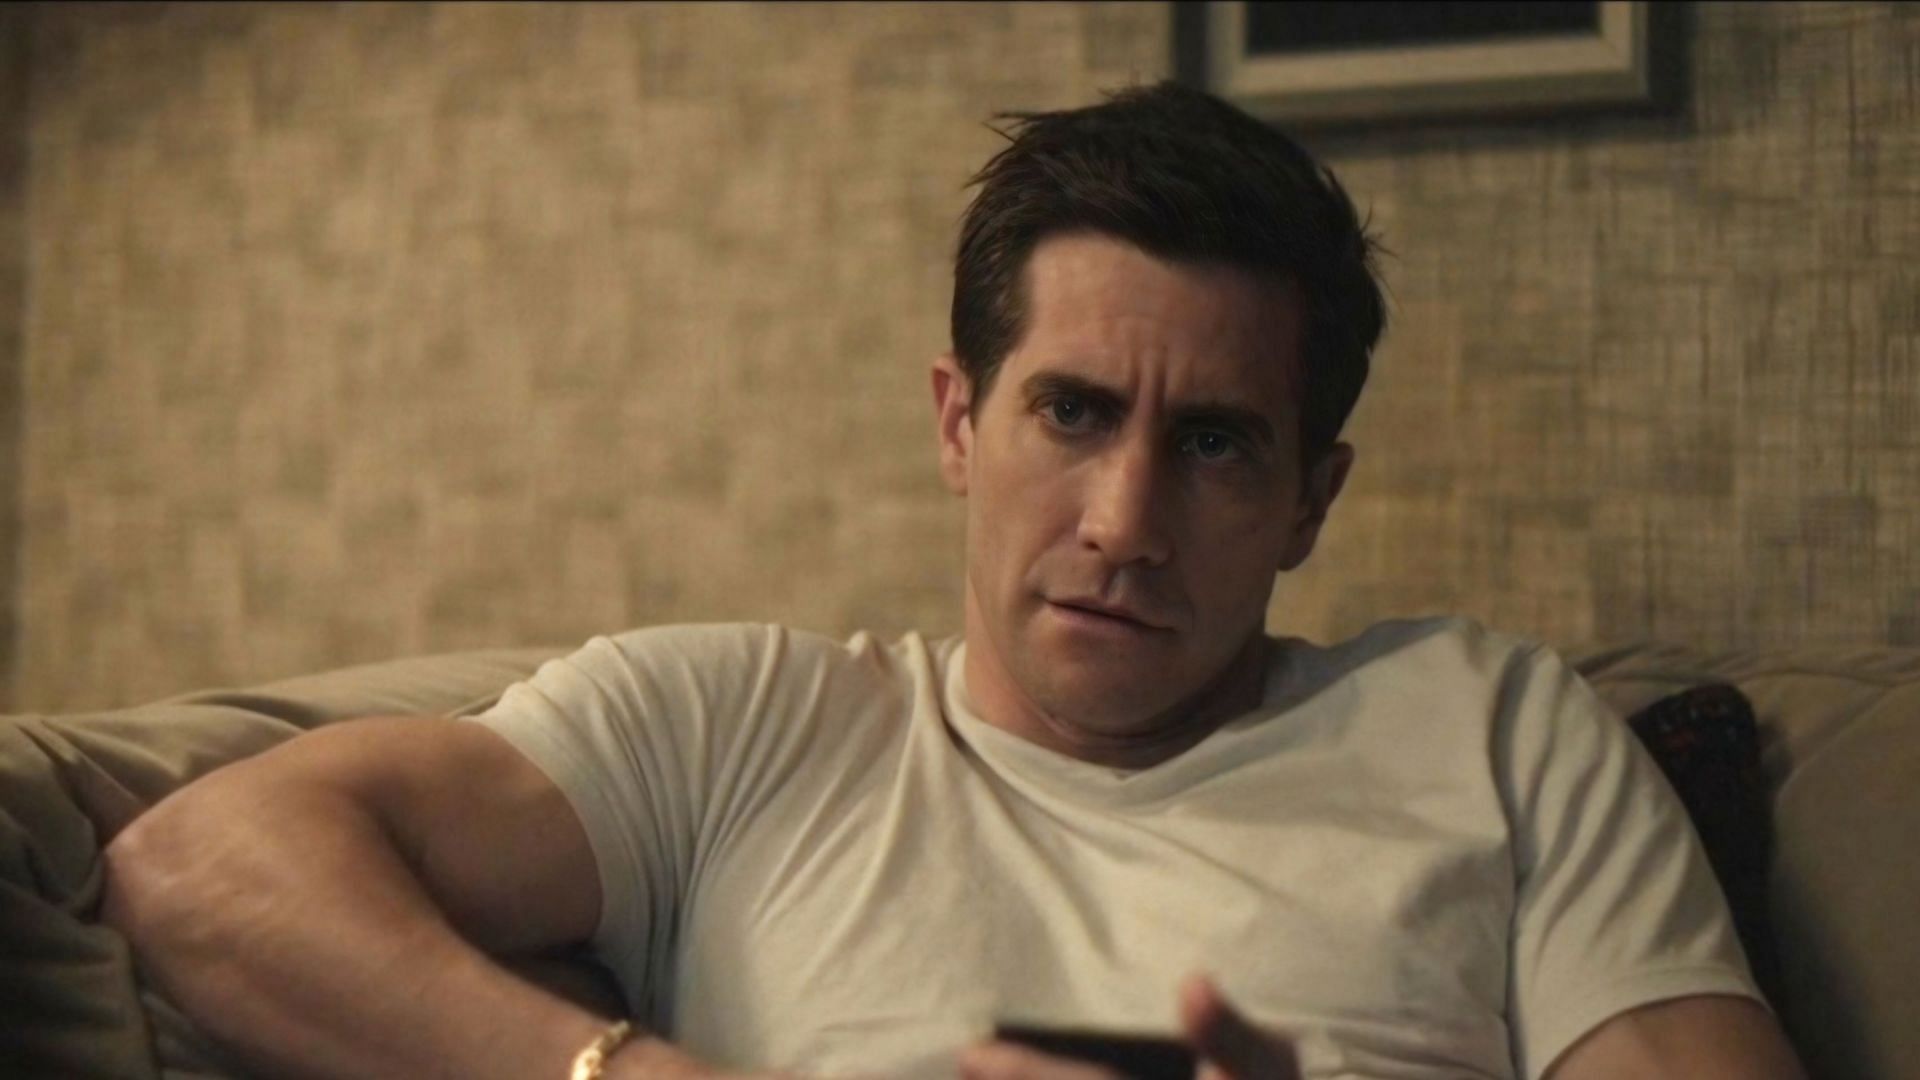 Jake Gyllenhaal in the final scene from Presumed Innocent episode 2 (43:49, via Apple TV+)